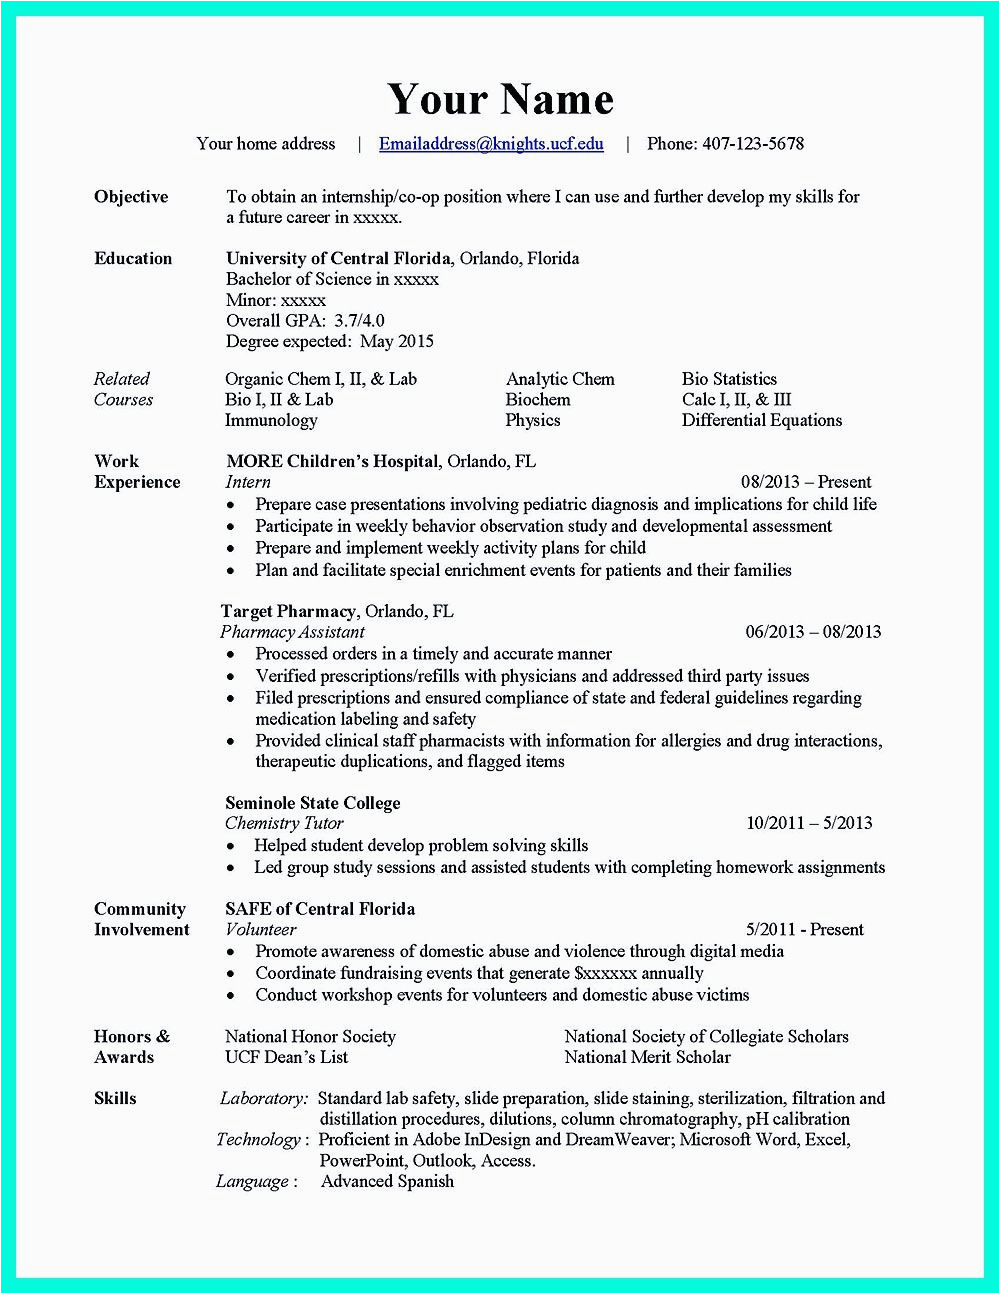 Sample Resume Of Fresh Graduate Computer Science Sample Resume for Fresh Graduate Puter Science